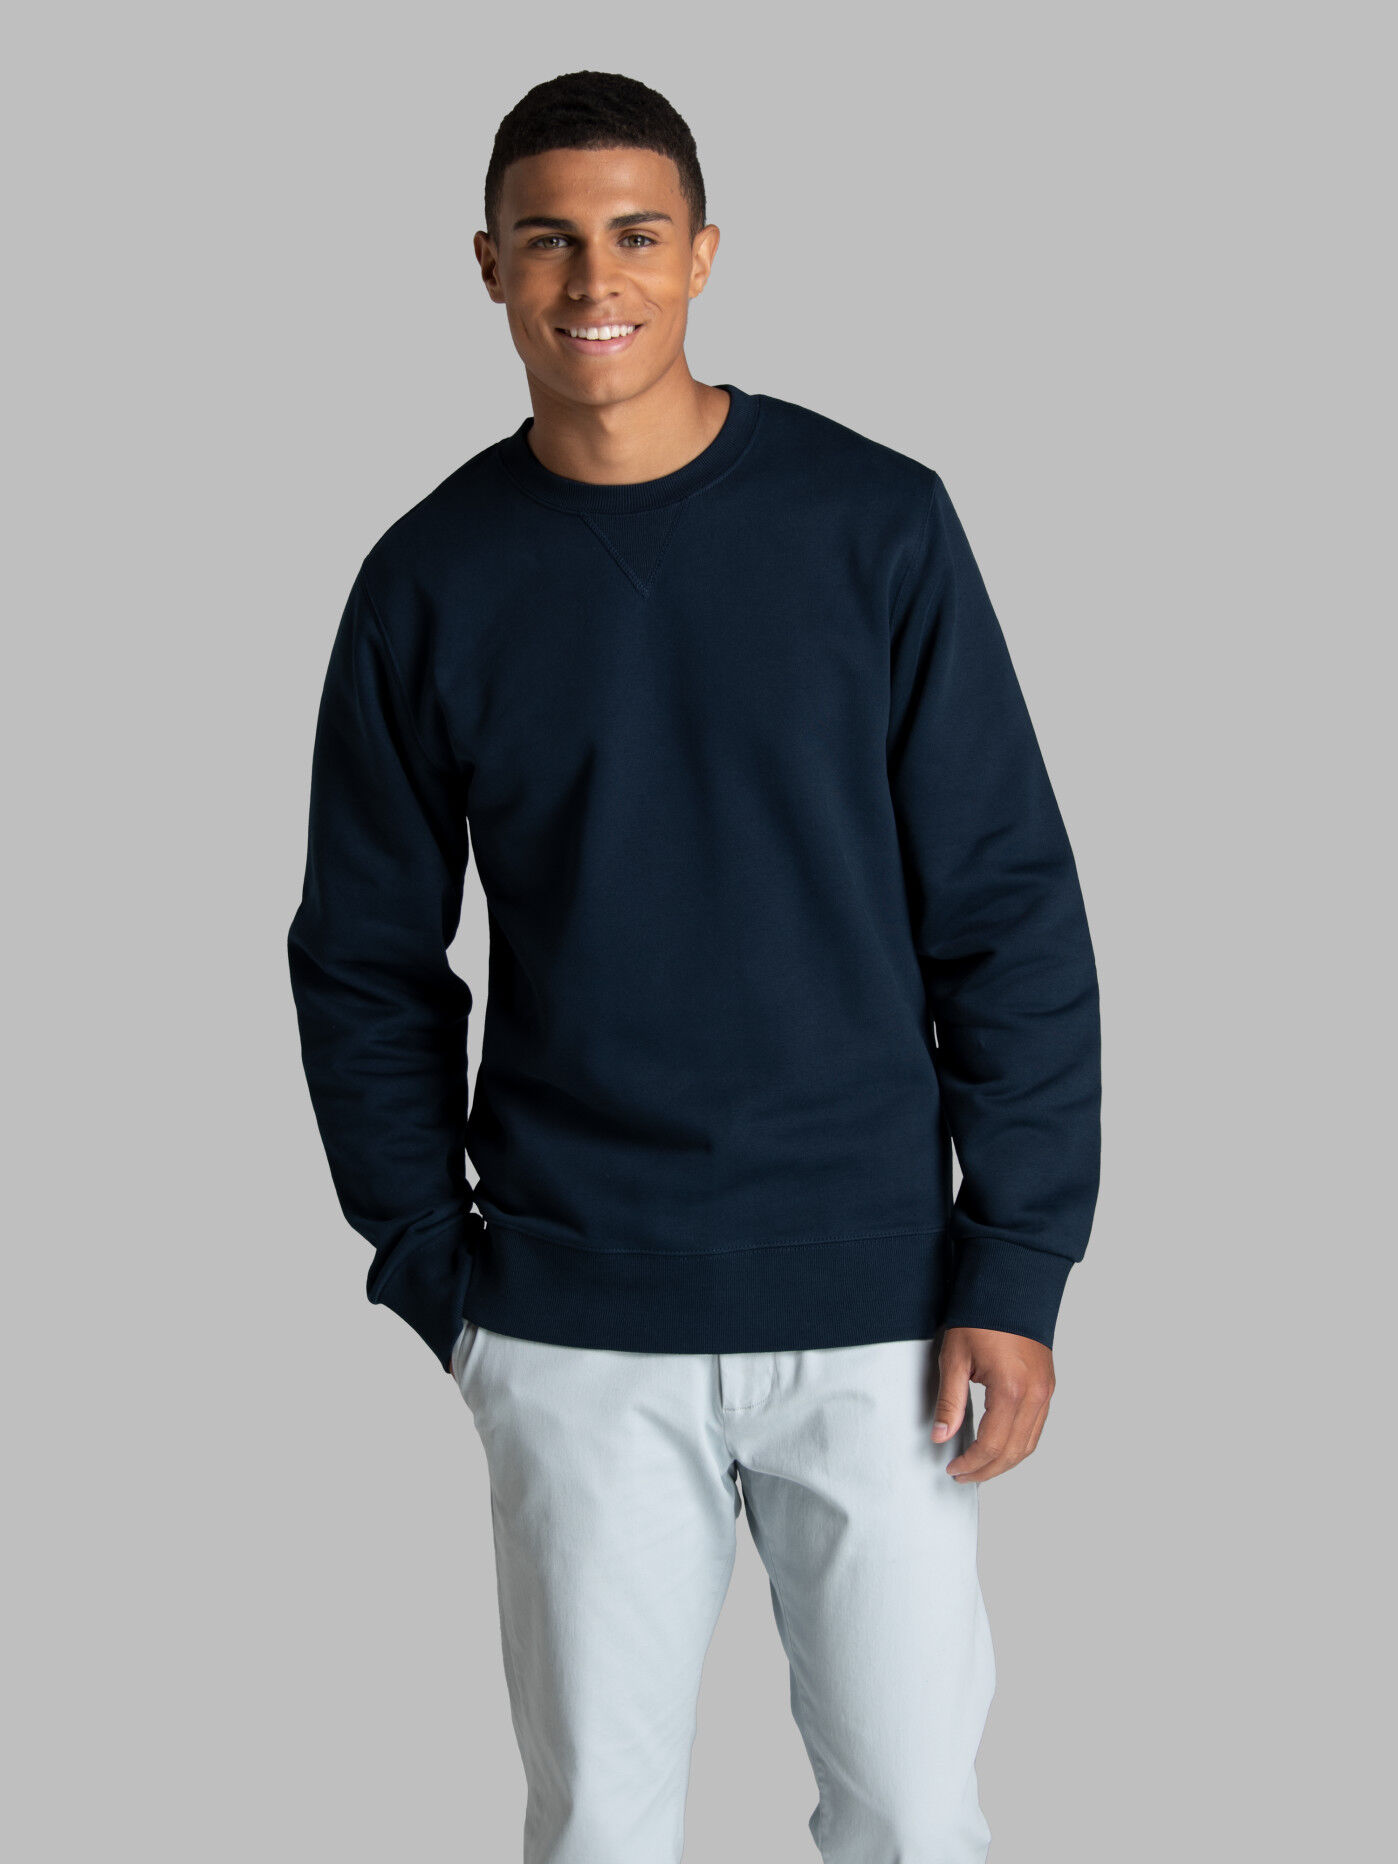 Men's Sweatshirts Pullovers, Hoodies and more | Fruit of the Loom